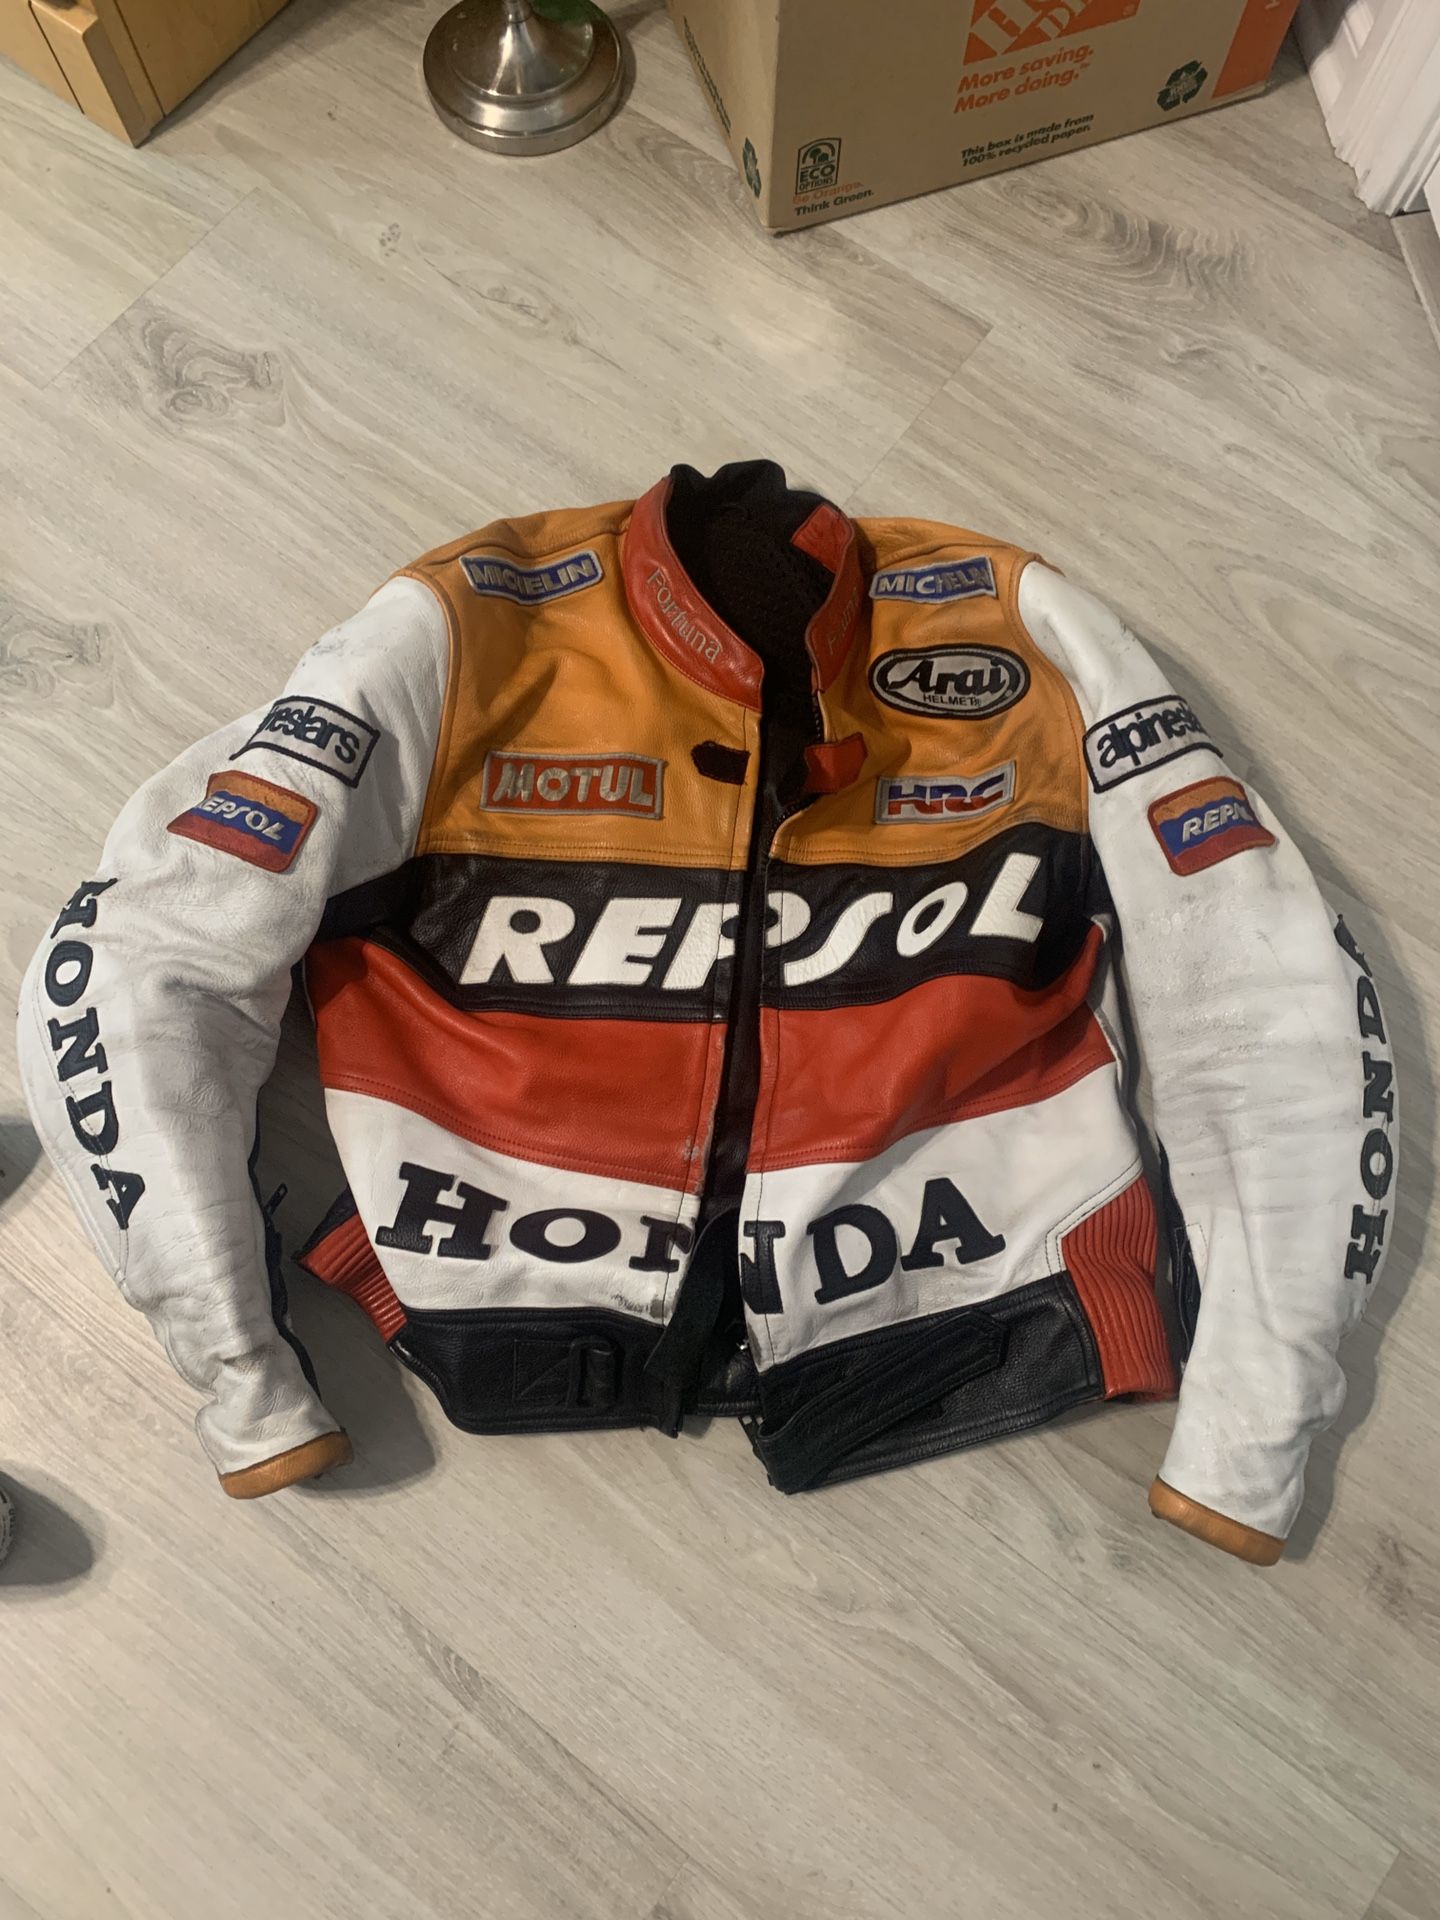 HRC Honda Repsol Motorcycle Jacket